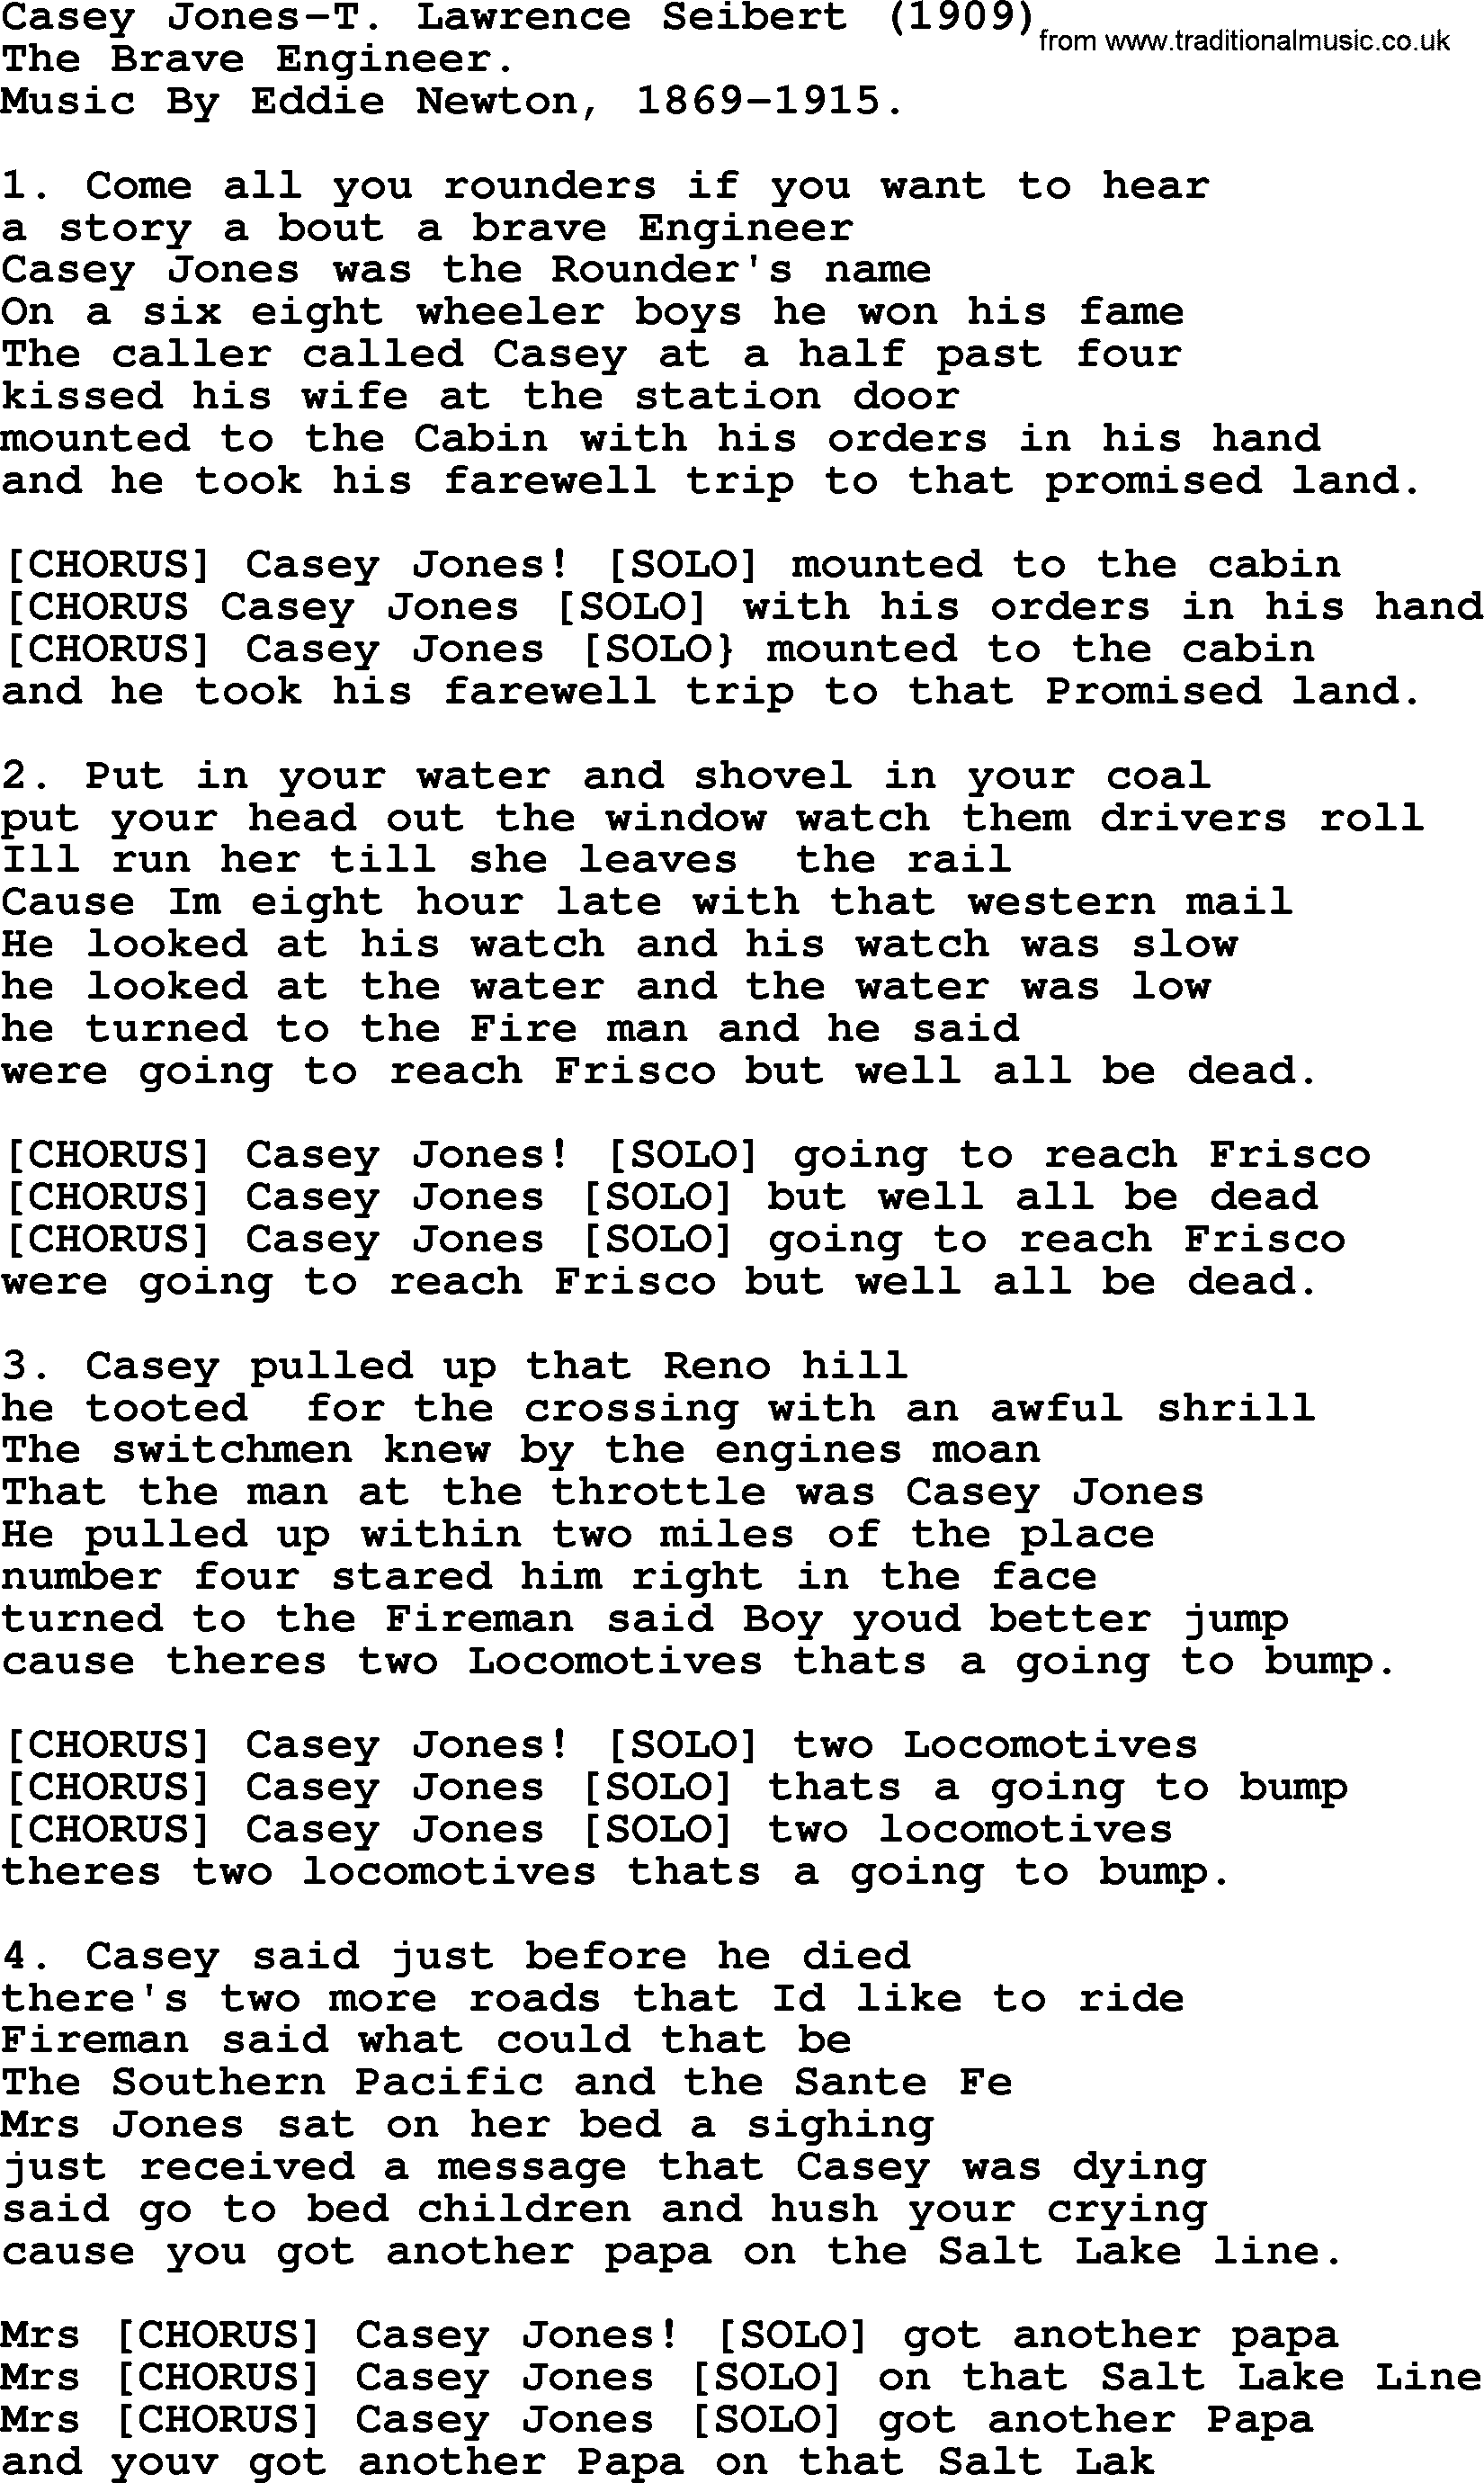 World War(WW1) One Song: Casey Jones-T Lawrence Seibert 1909, lyrics and PDF